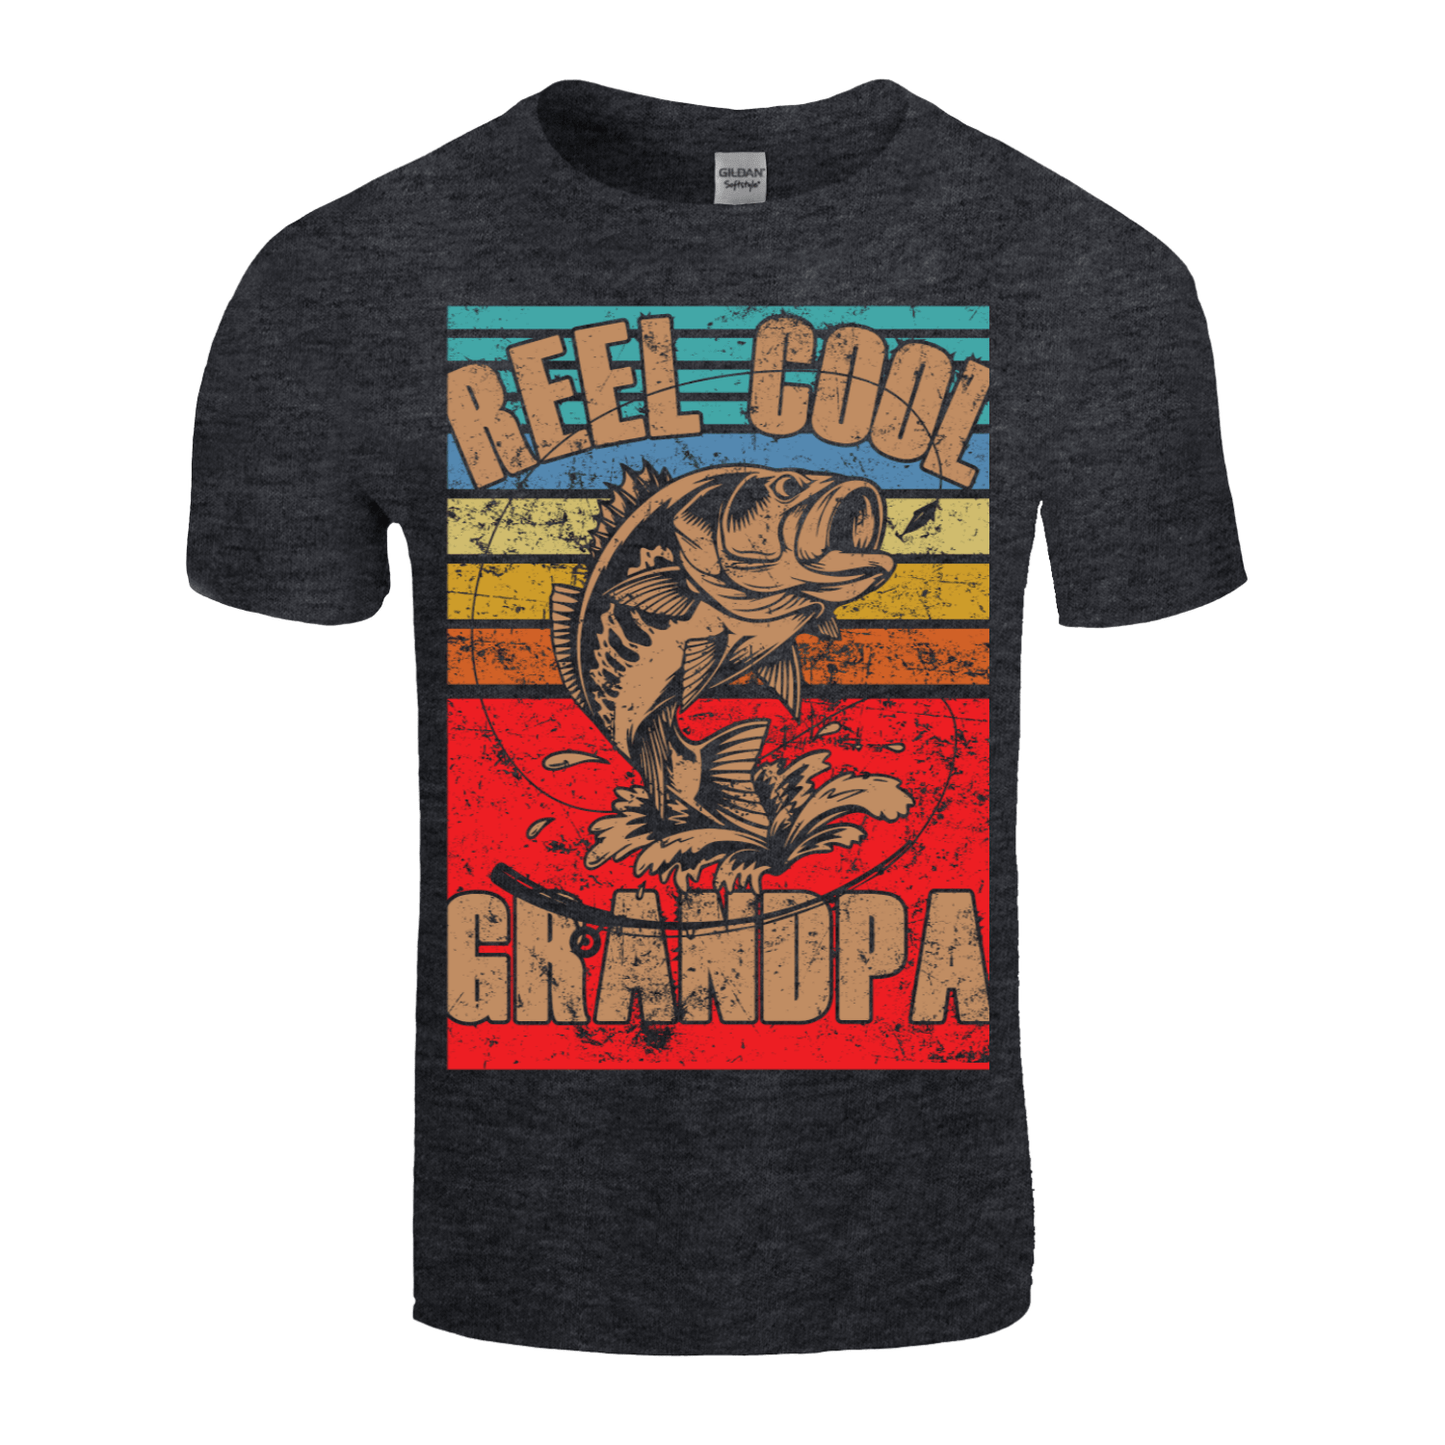 Embrace Grandpa's Cool Fishing Style - Reel Cool Grandpa Vintage Graphic T-Shirt